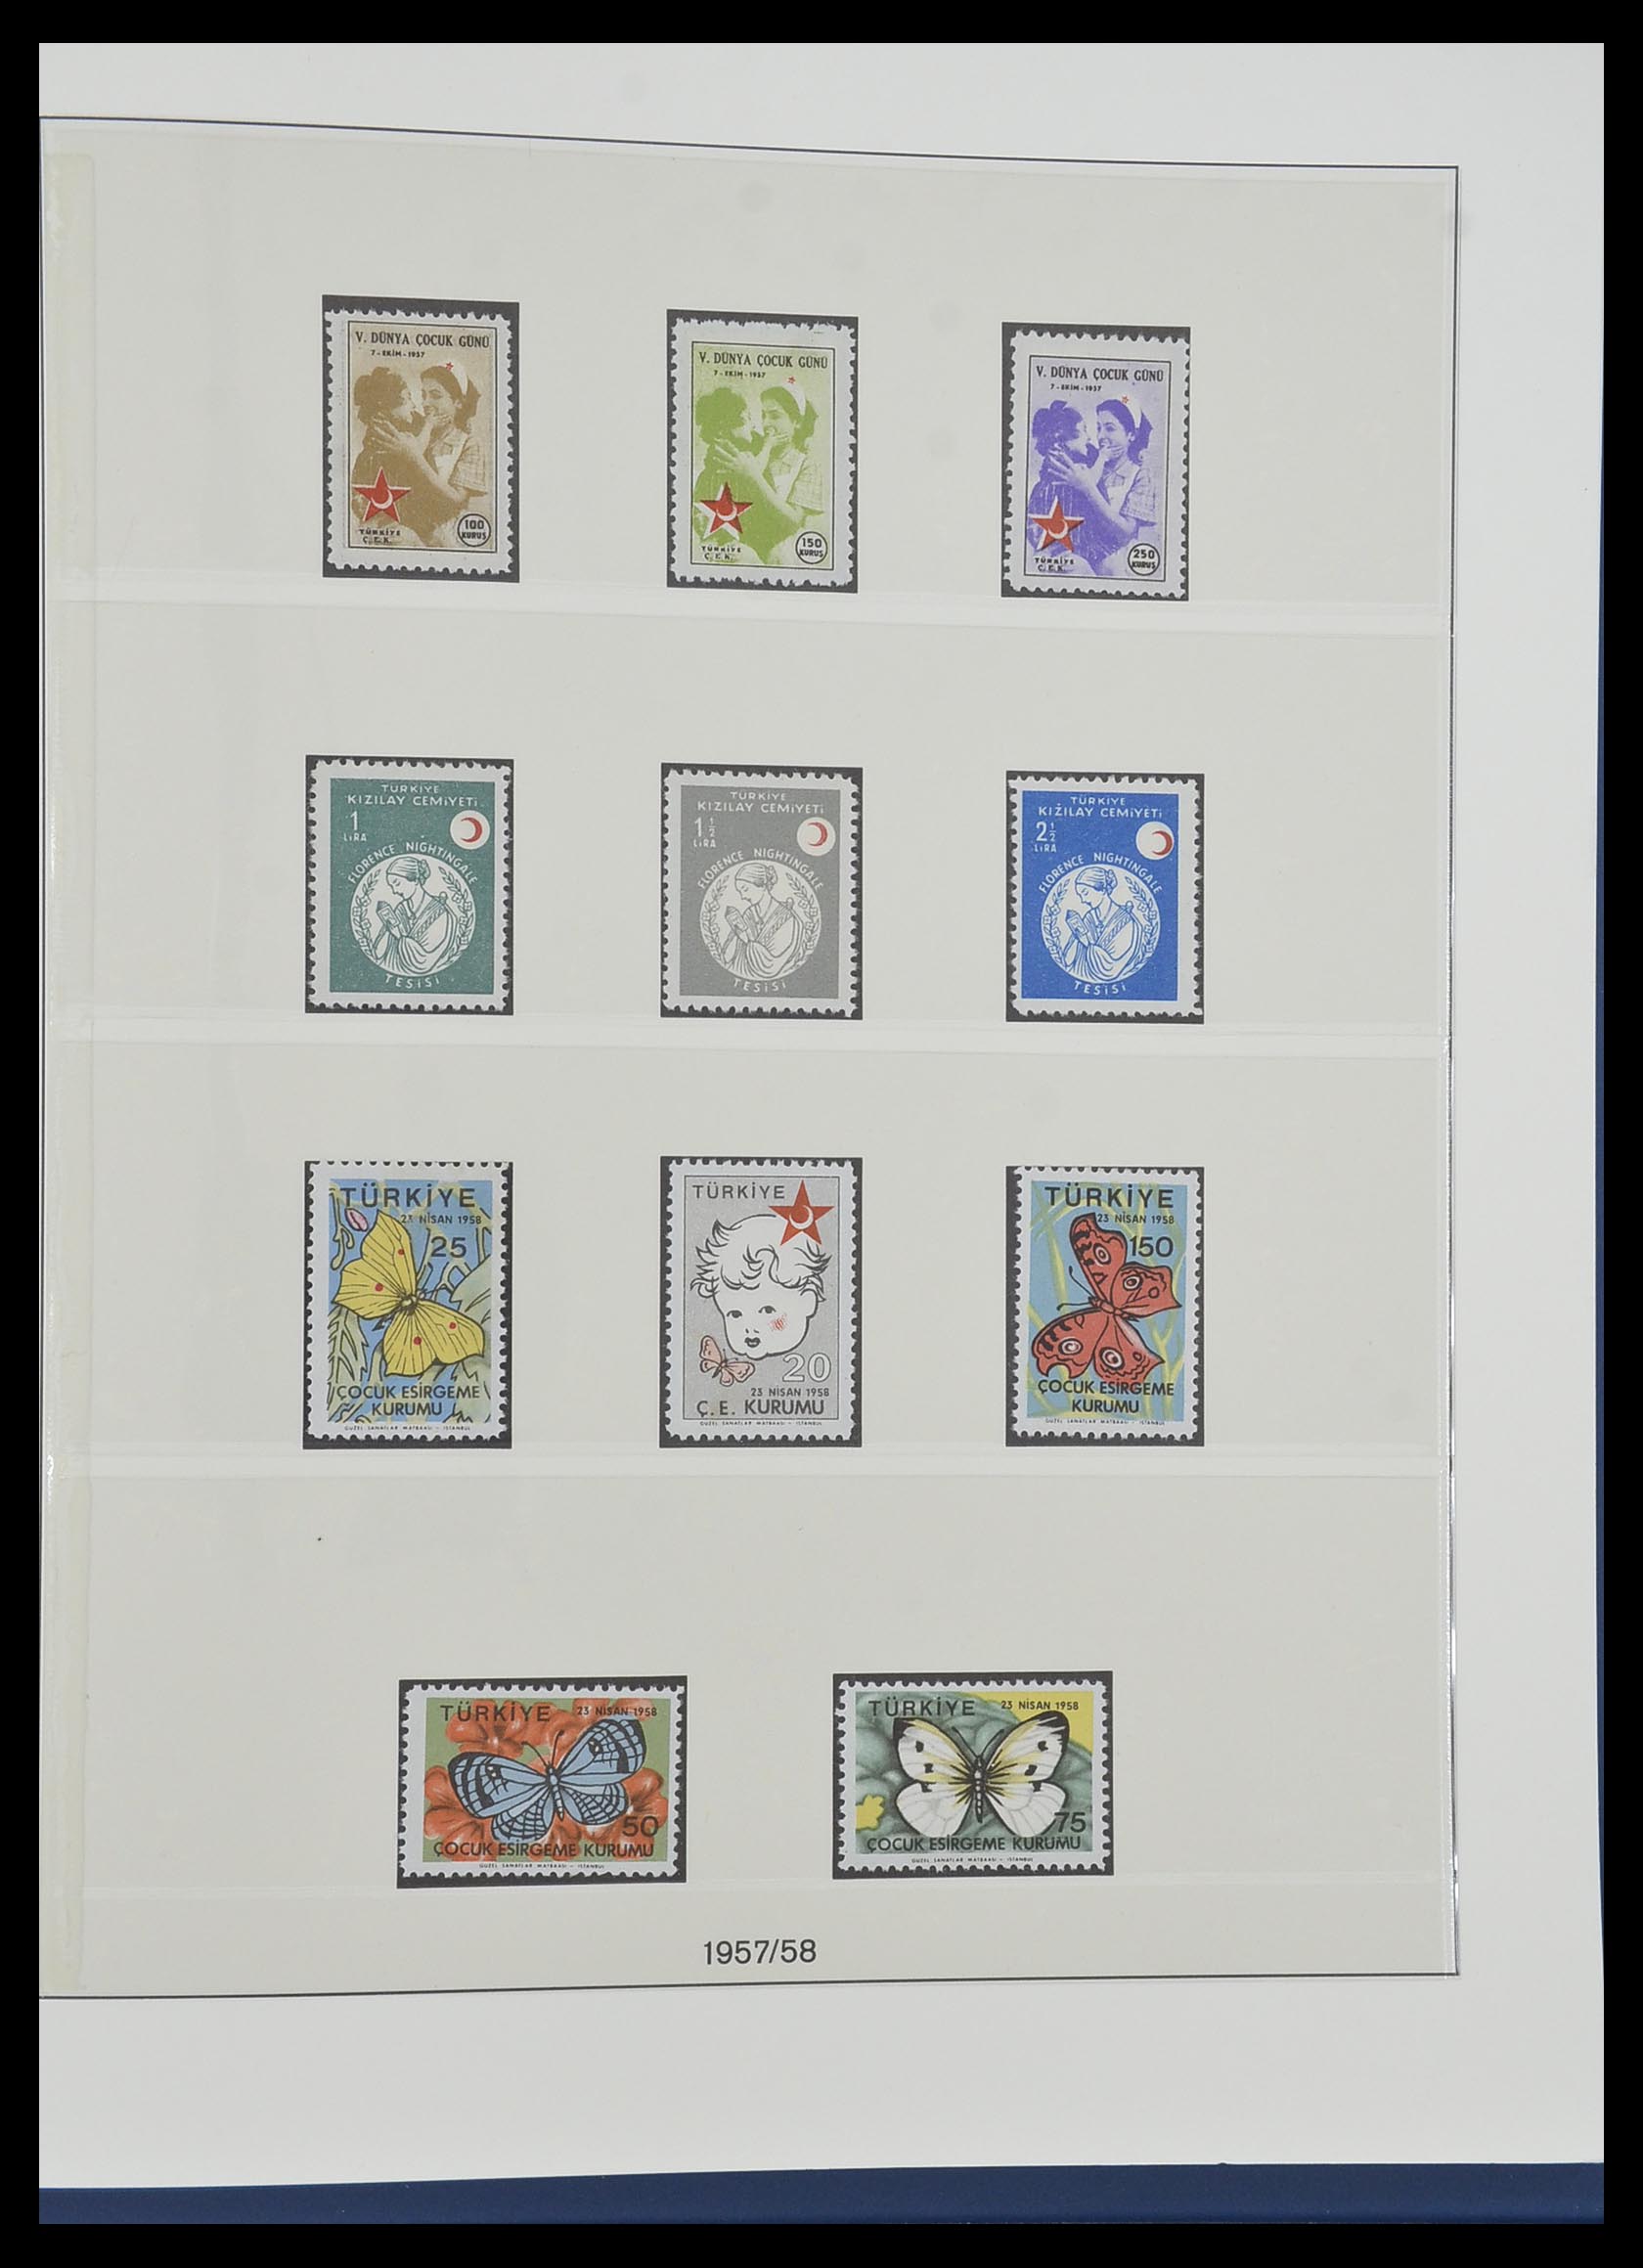 33984 202 - Stamp collection 33984 Turkey 1938-1990.